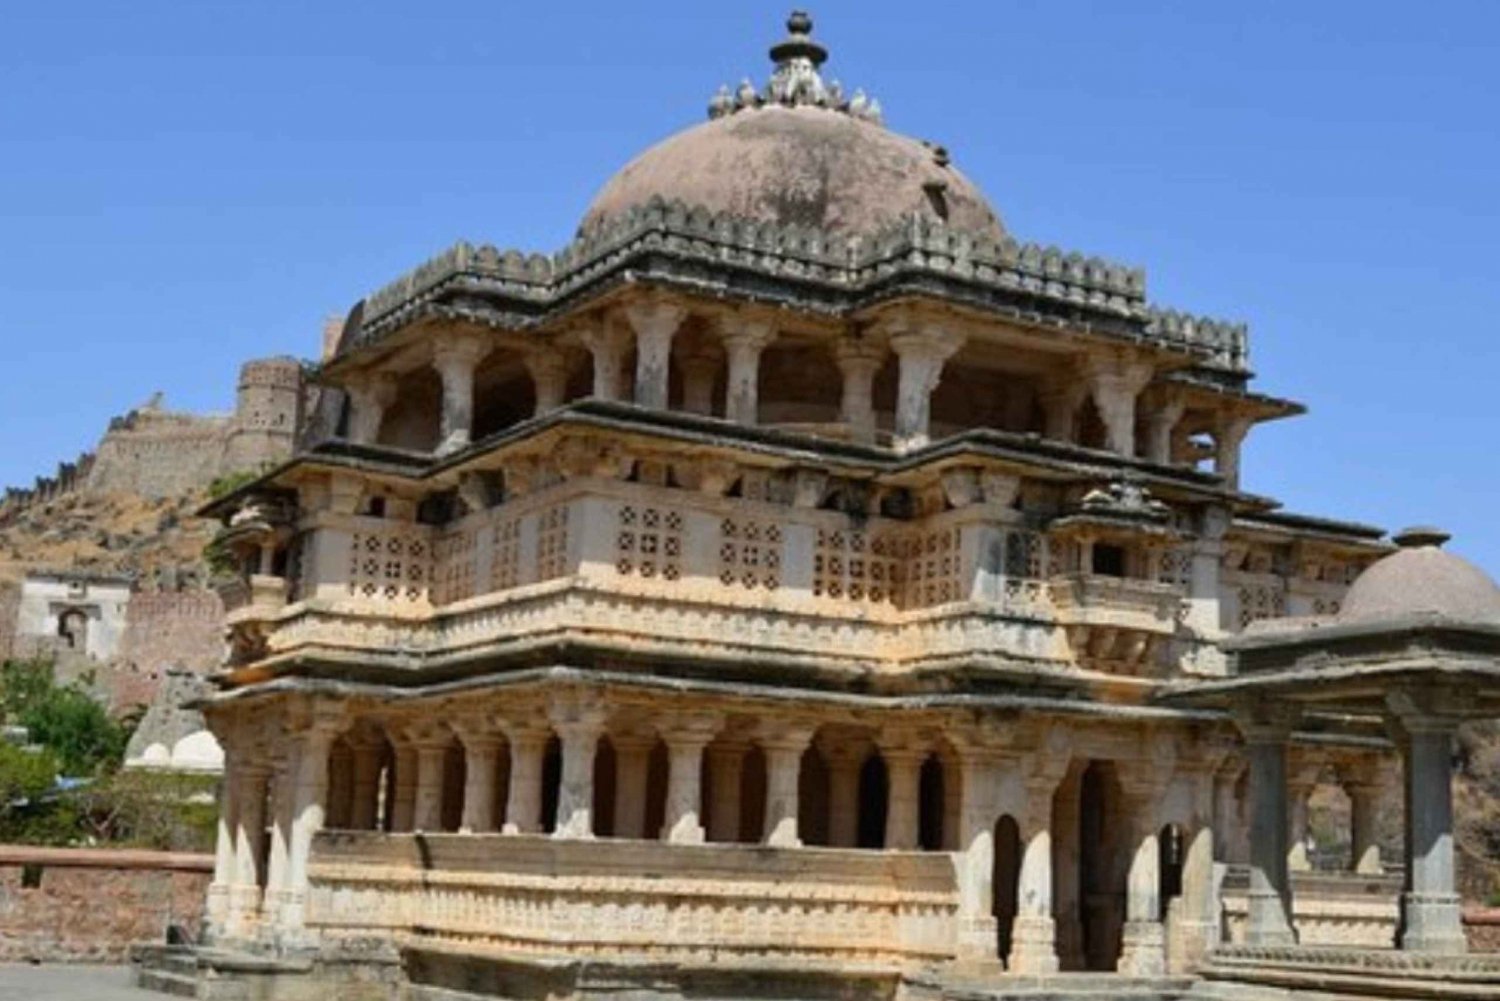 Same Day Tour Of Kumbhalgarh Fort & Ranakpur Jain Temple